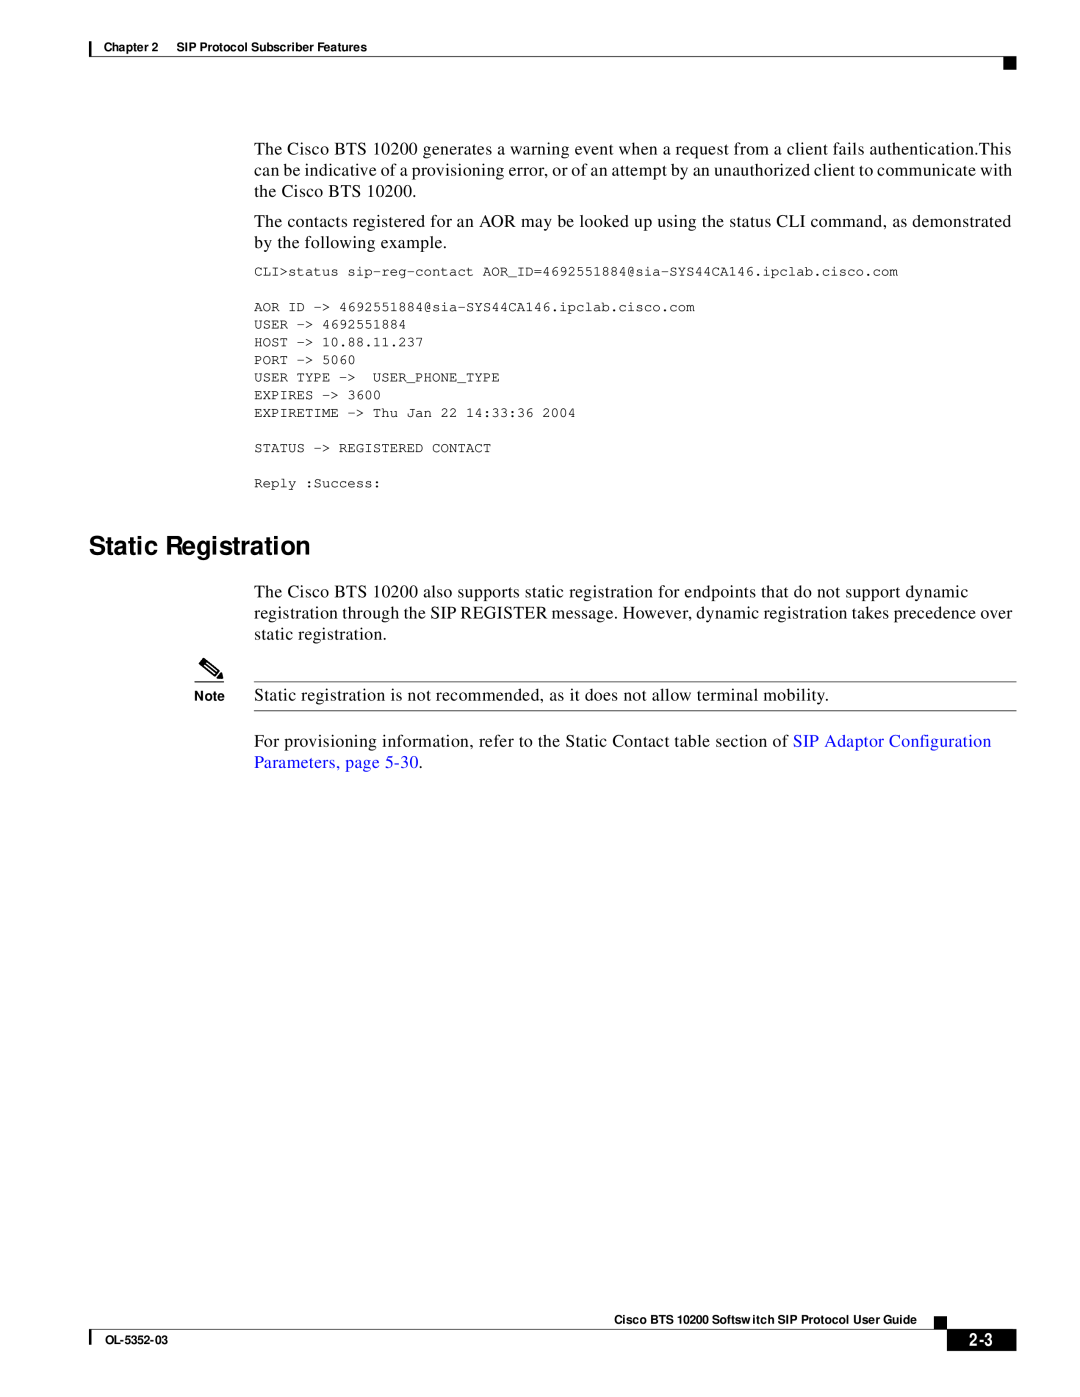 Cisco Systems BTS 10200 manual Static Registration, AOR ID - 4692551884@sia-SYS44CA146.ipclab.cisco.com USER HOST PORT 